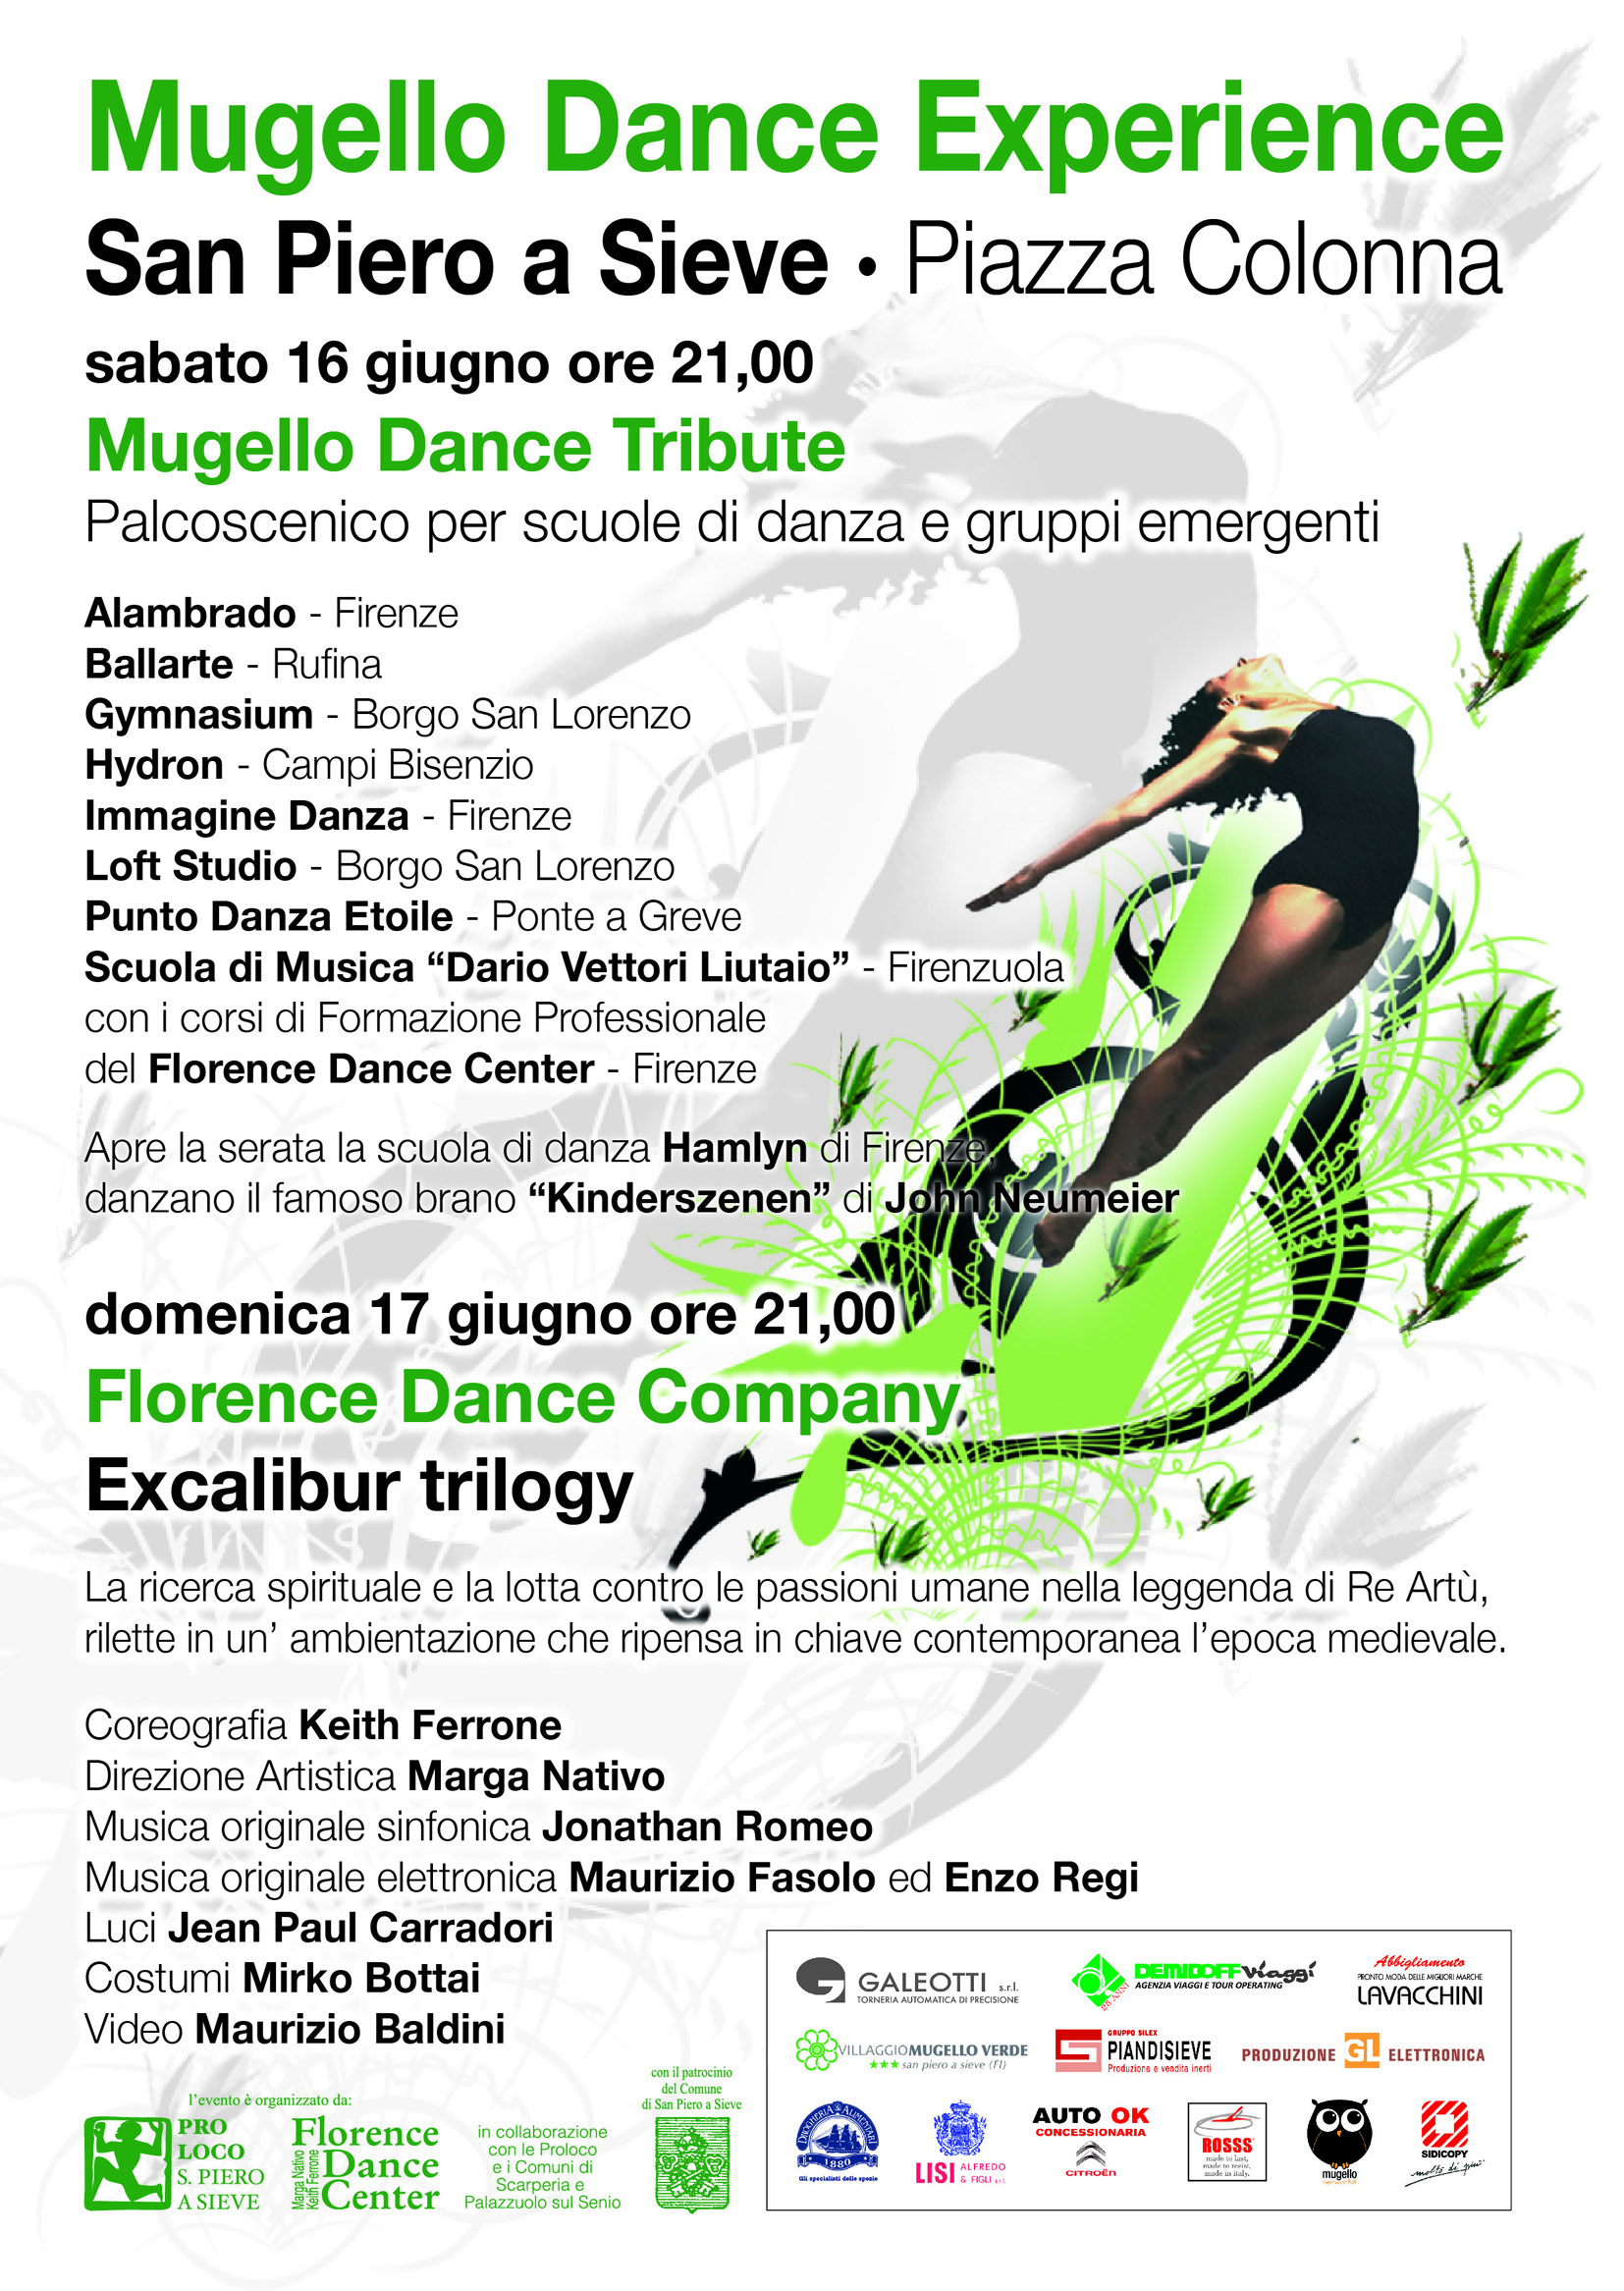 Mugello Dance Experience